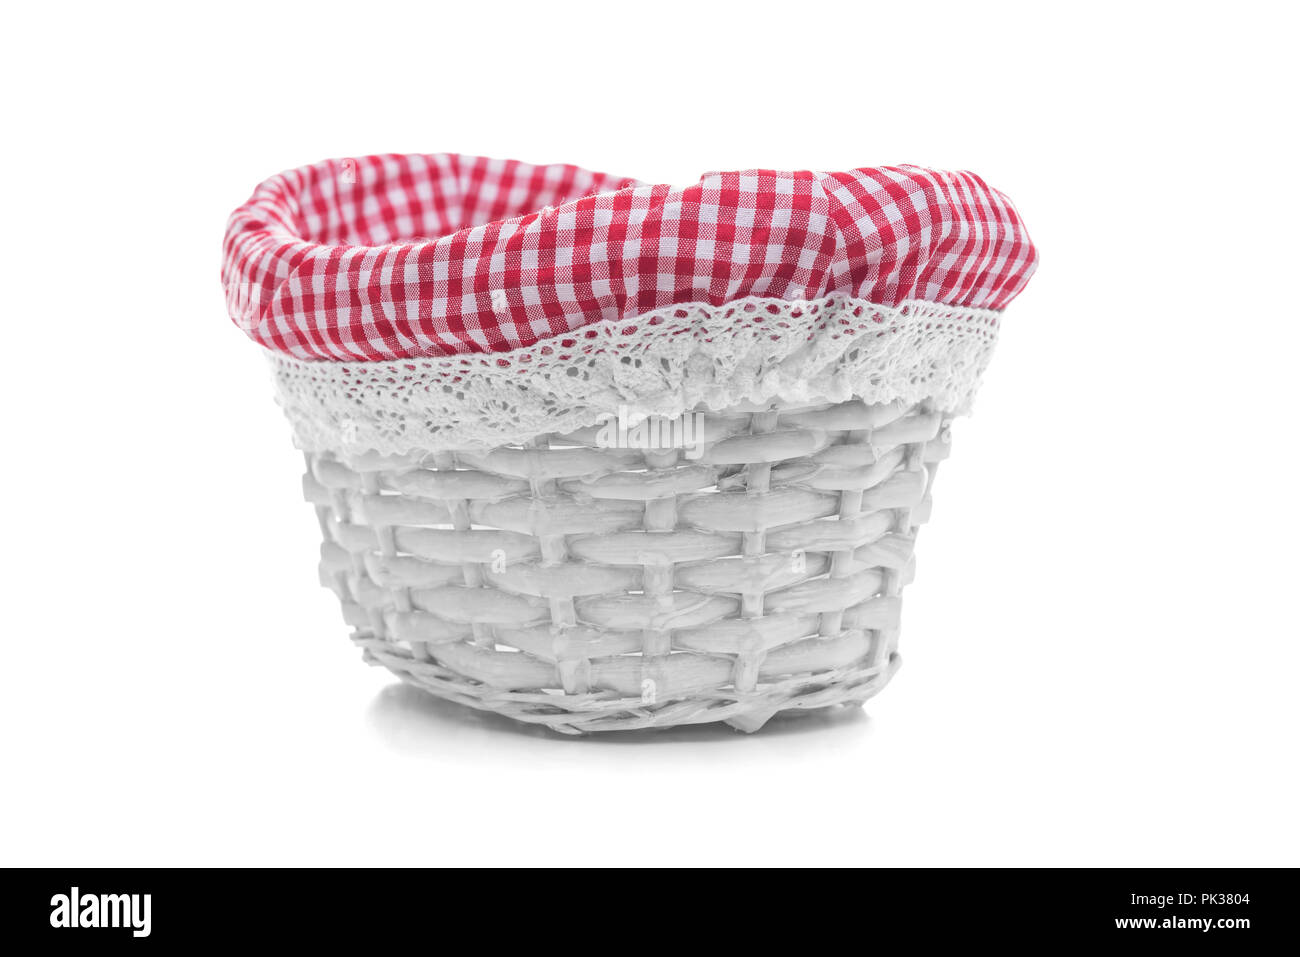 White wicker basket on a white background. Stock Photo